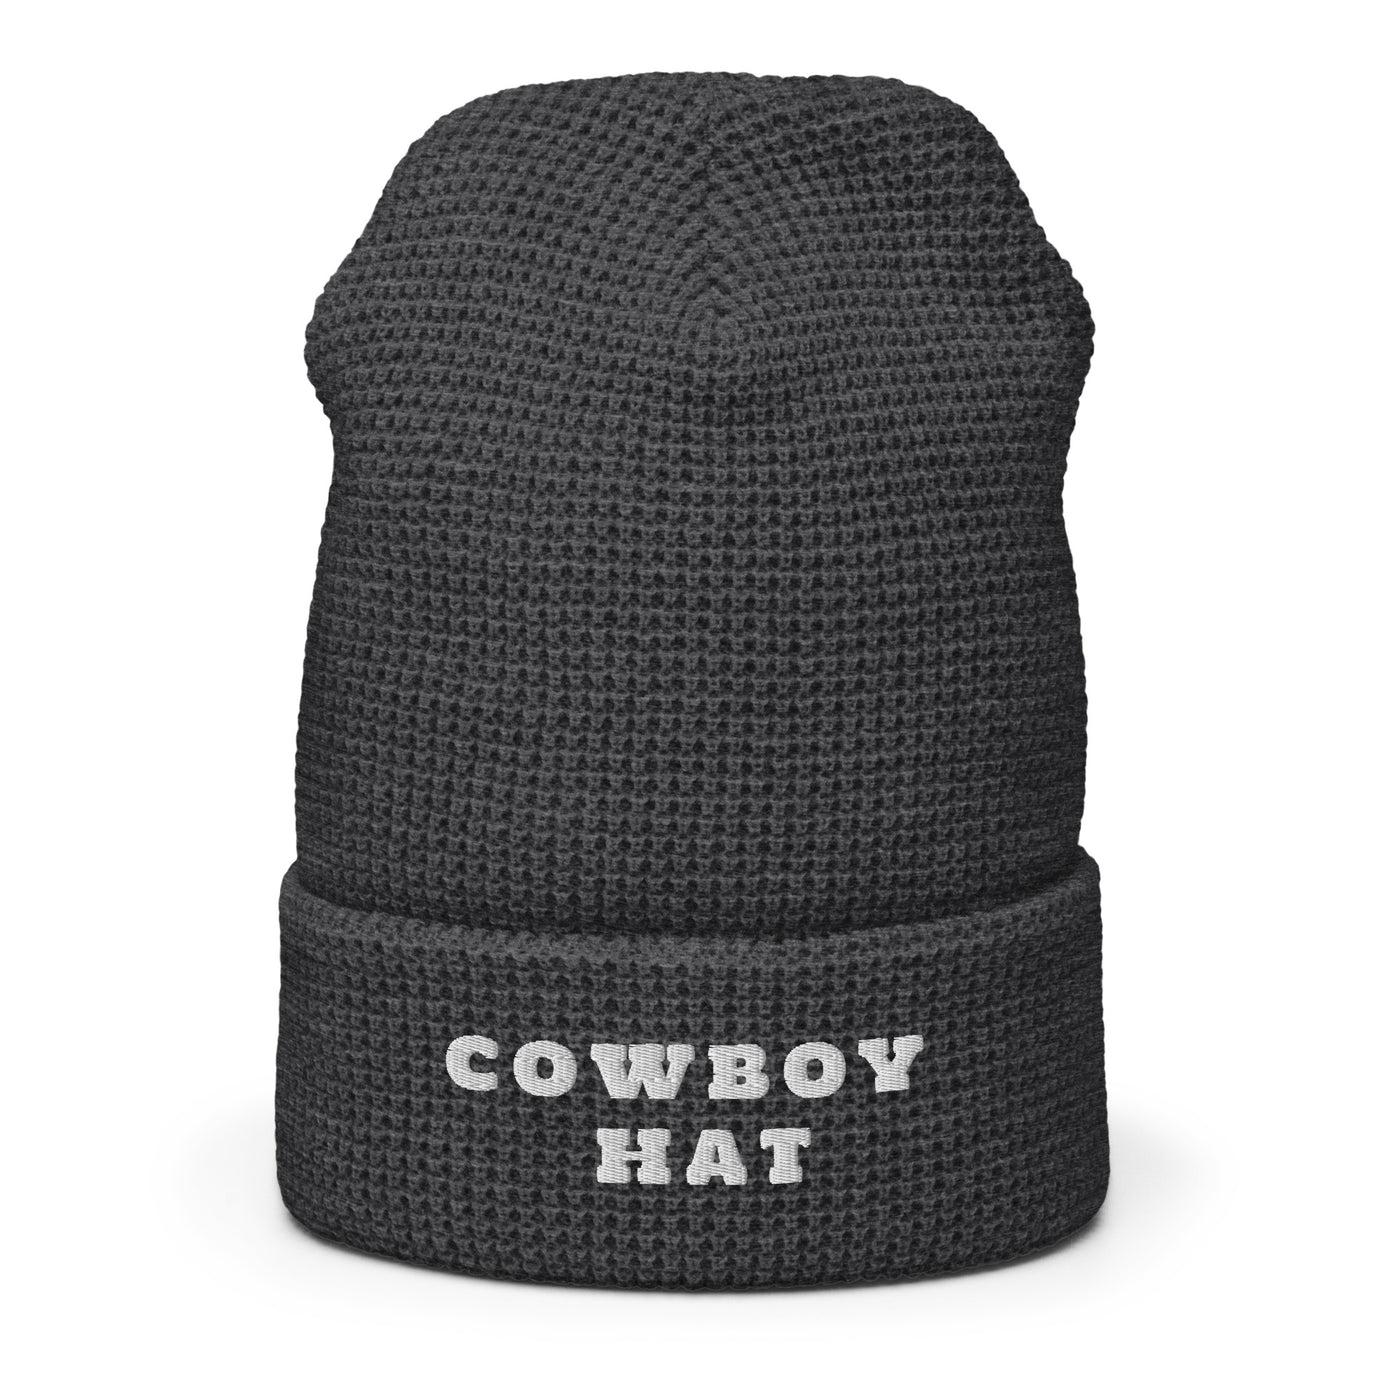 "Cowboy Hat" Beanie